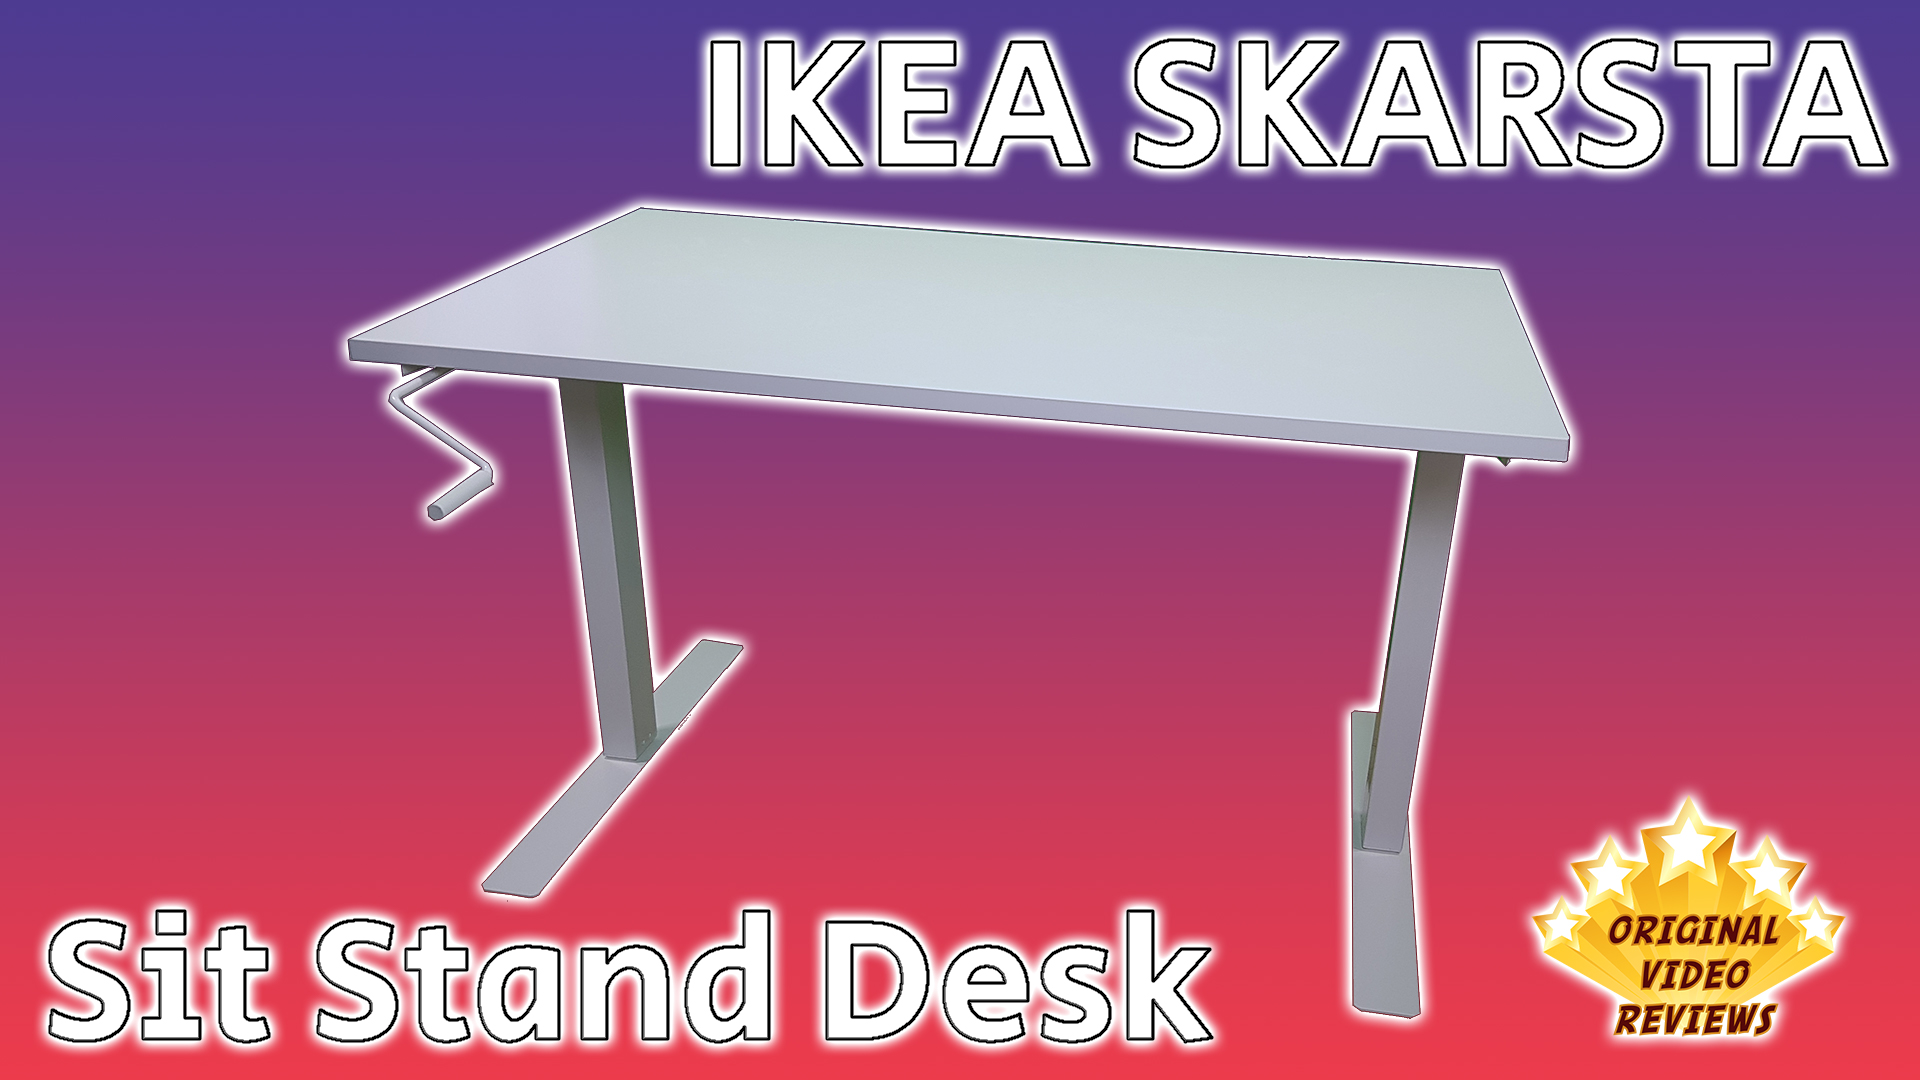 Ikea Skarsta Sit Stand Desk Review, Ikea Skarsta Sit Stand Desk Instructions